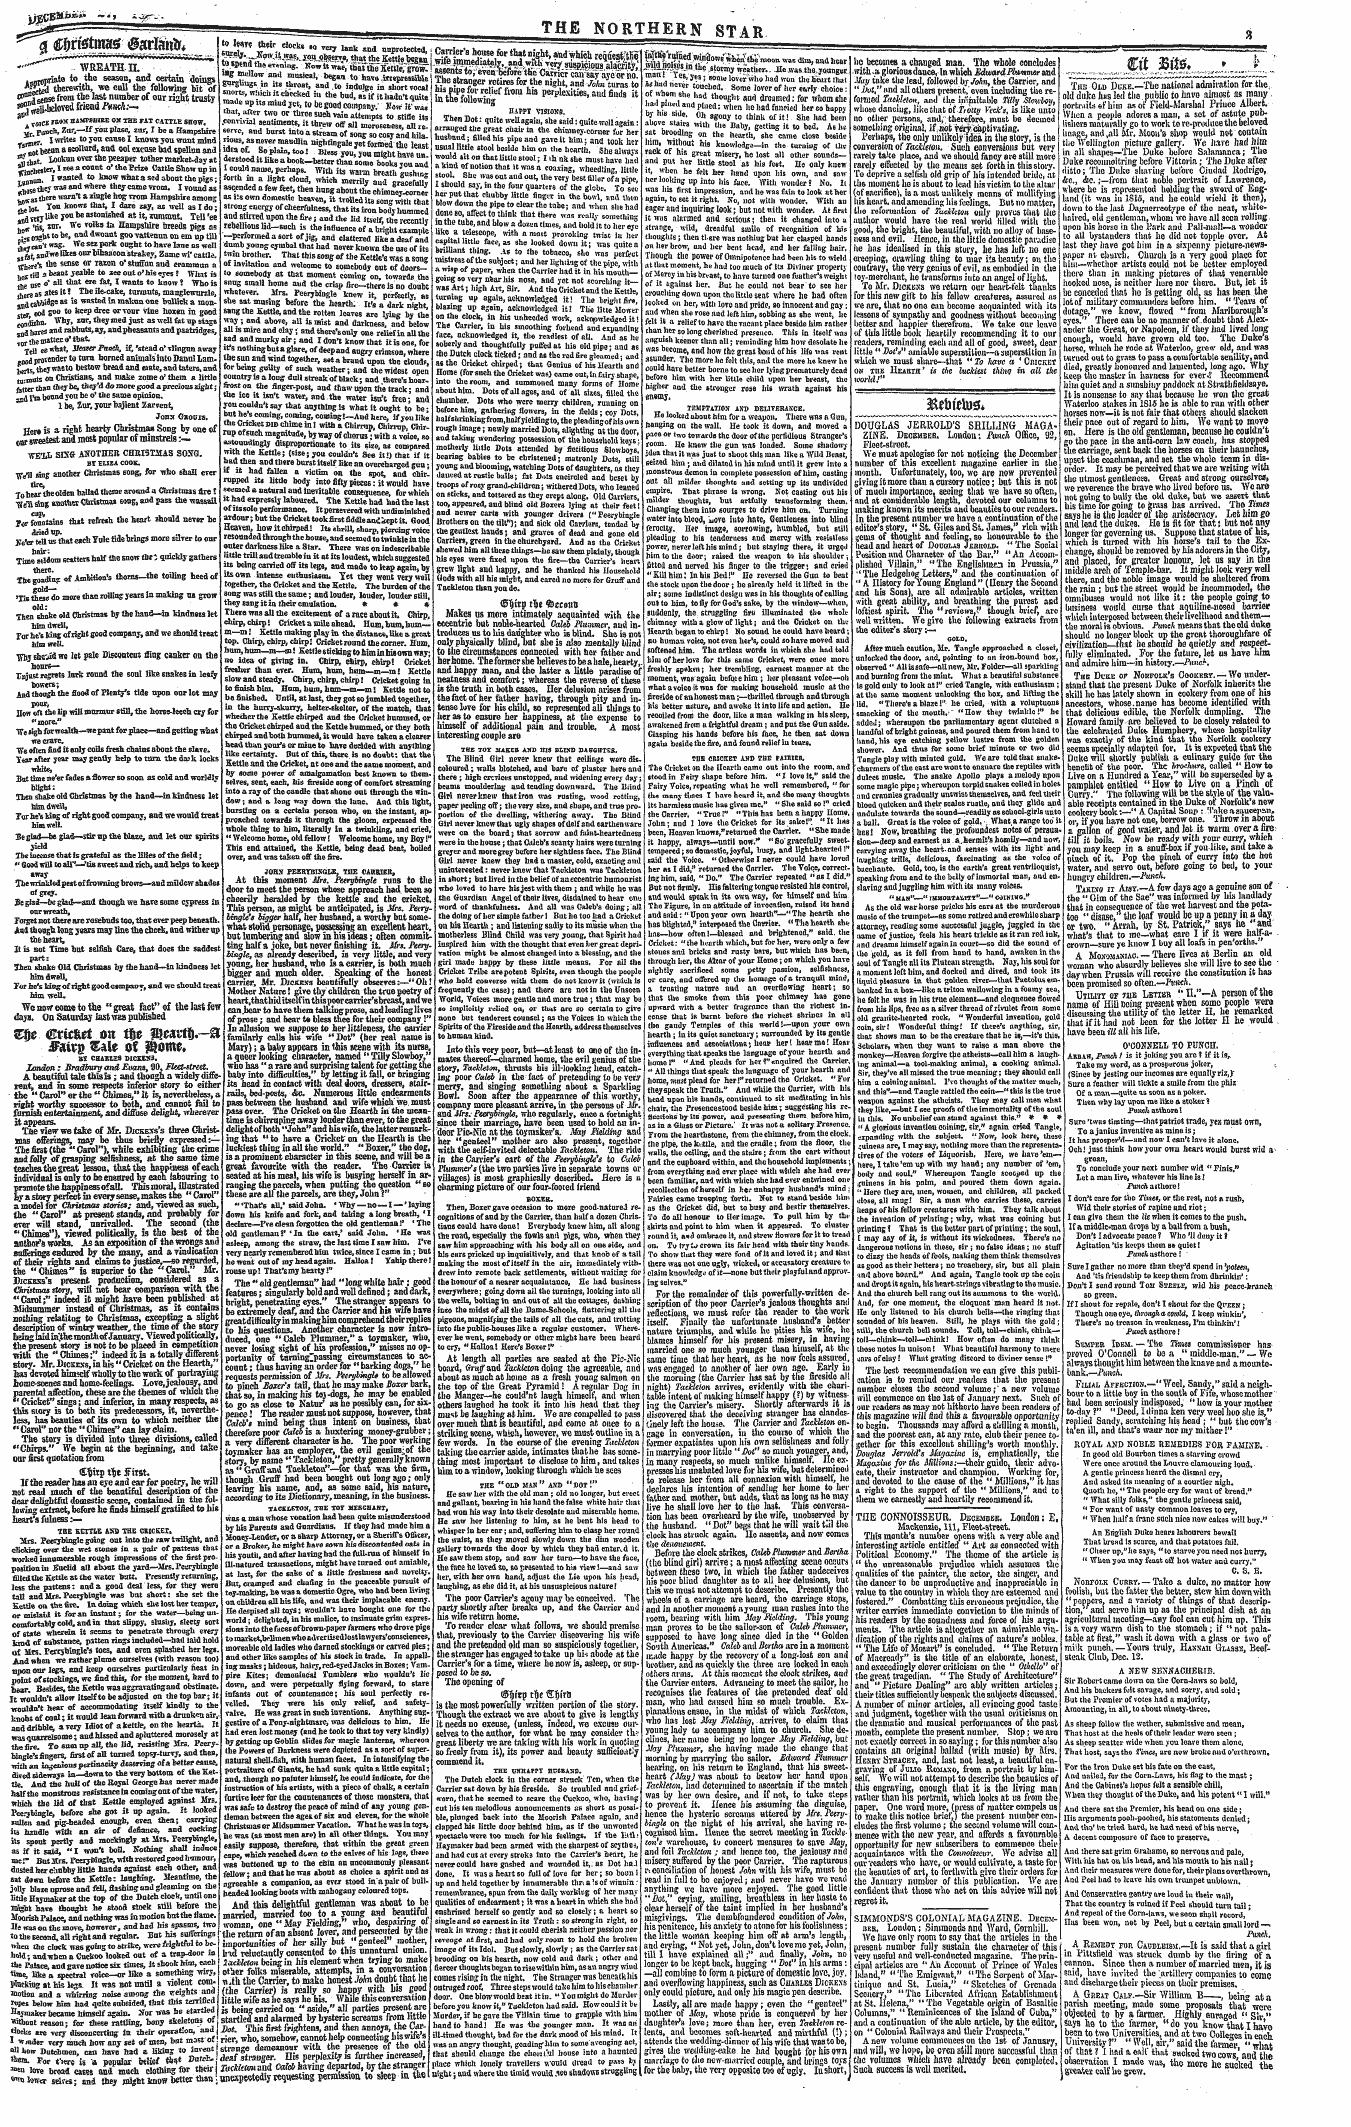 Northern Star (1837-1852): jS F Y, 3rd edition - ' " Ctock Titscsmi**'*'' • —'«'» I. ^R-....